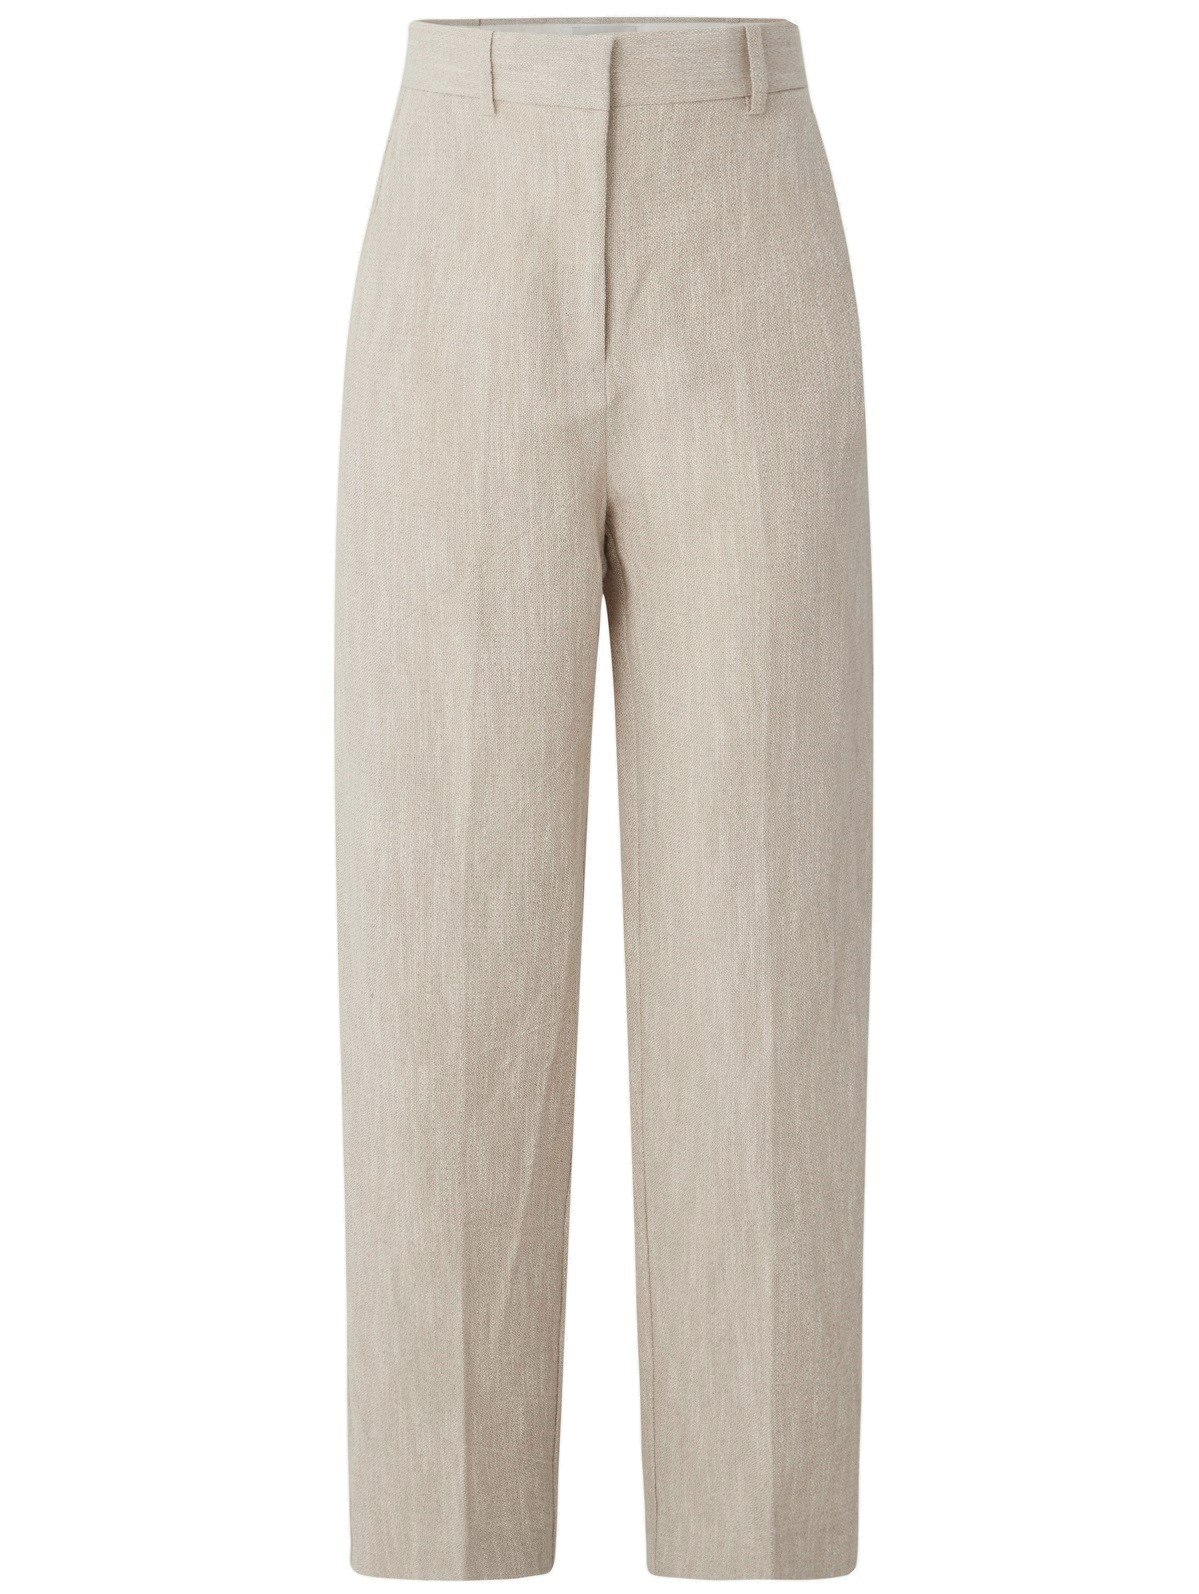 DAGMAR Slim Suit Trouser in Light Sand Beige